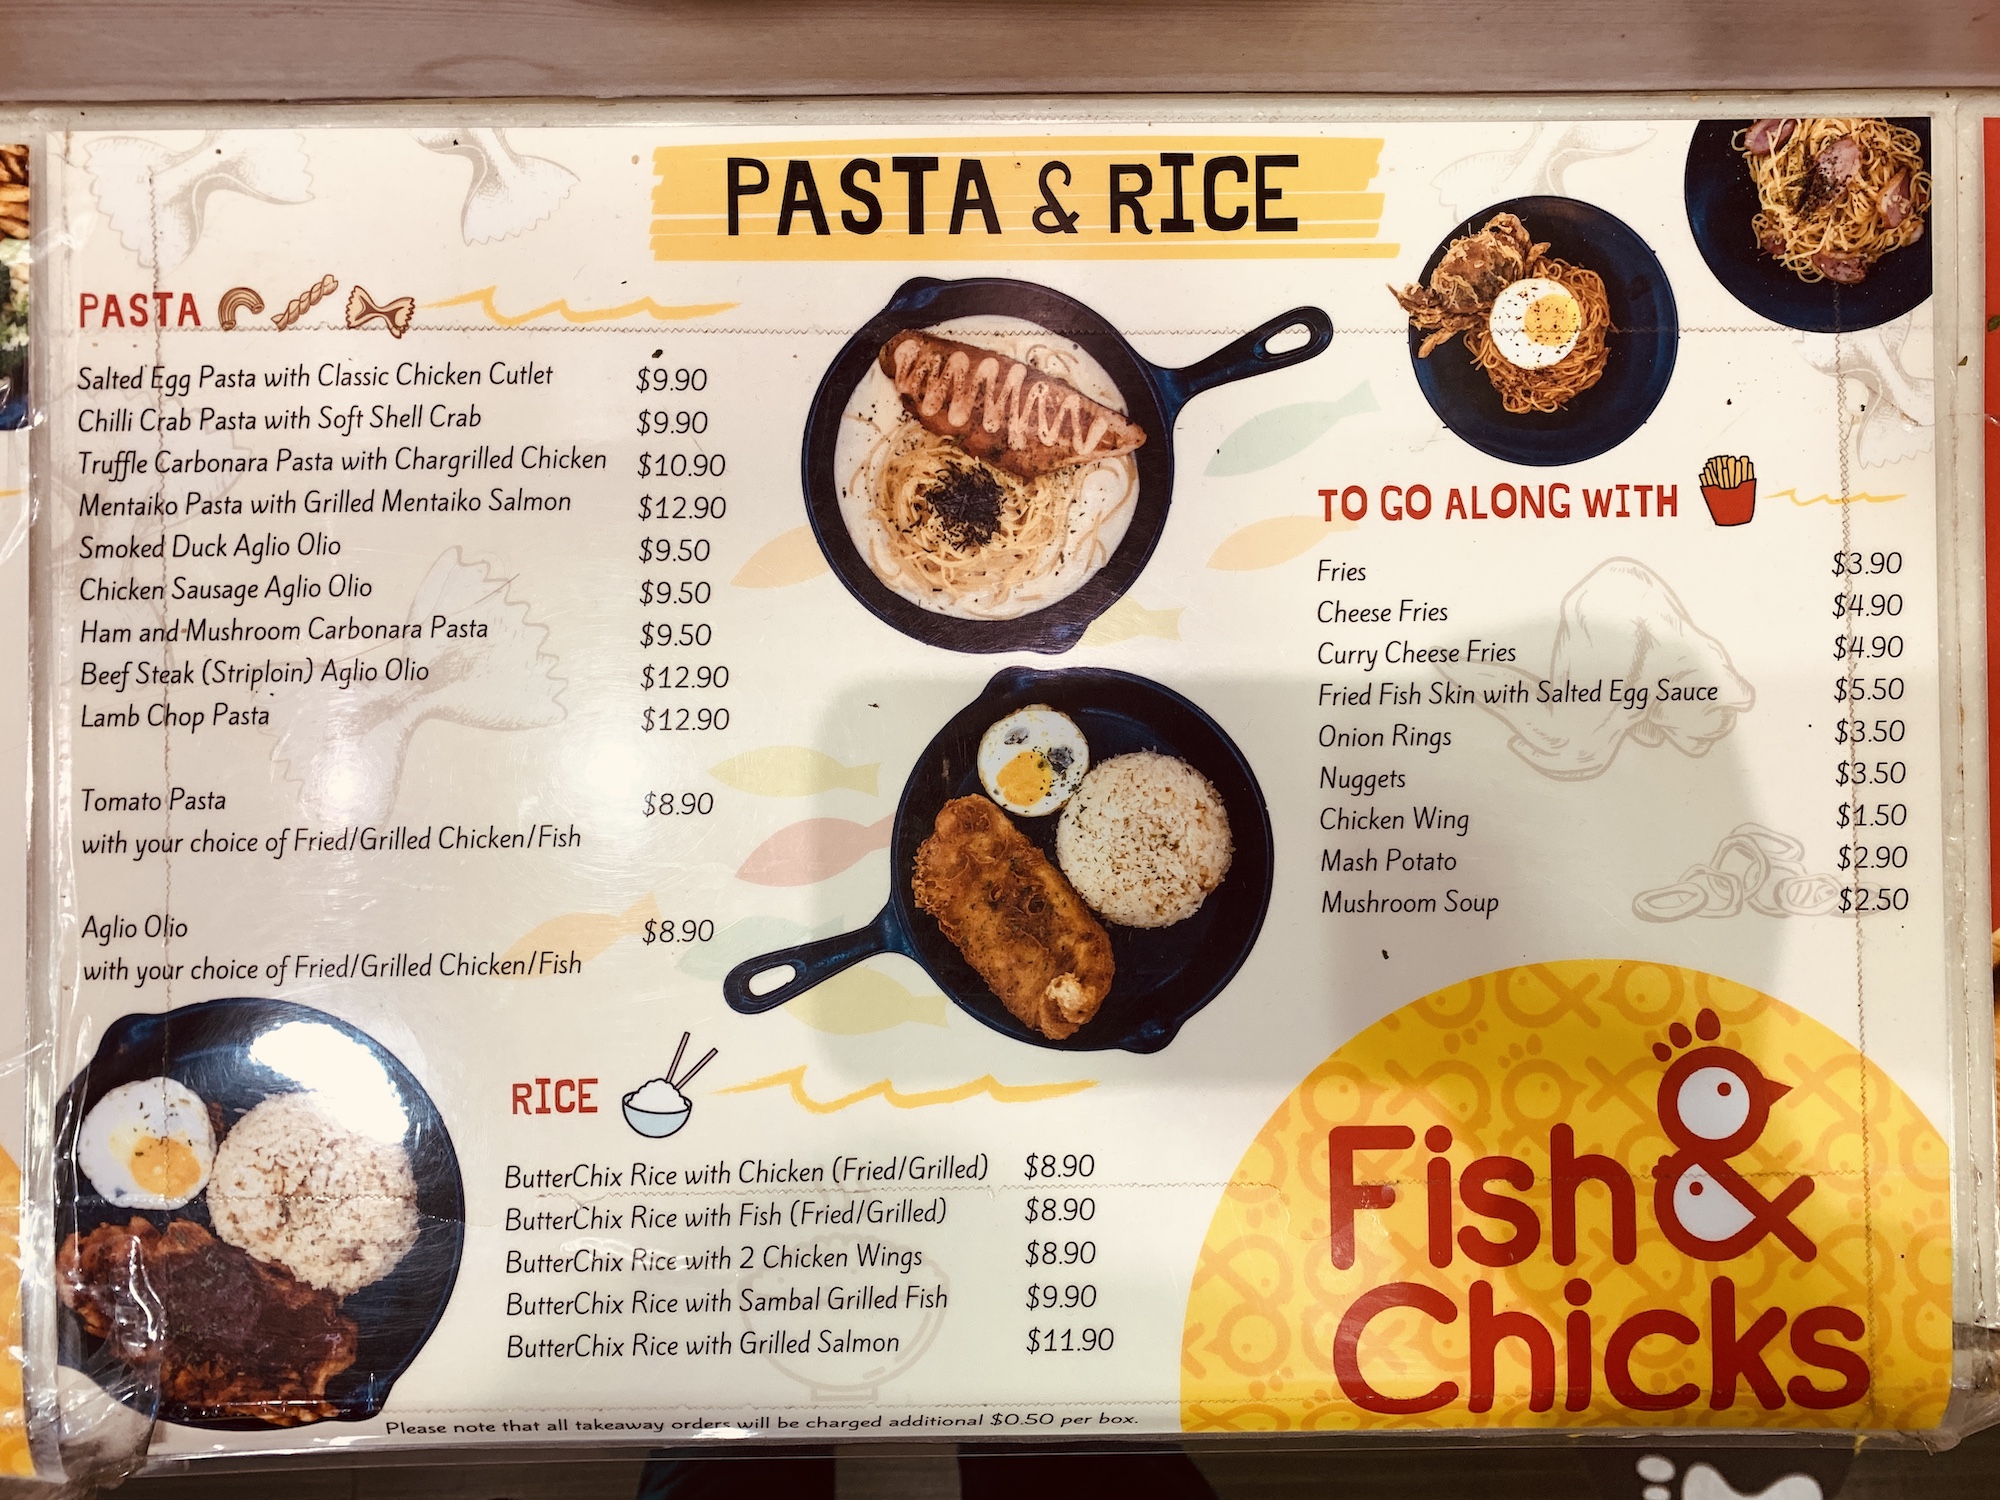 Fish & Chicks - Pasta & Rice Menu